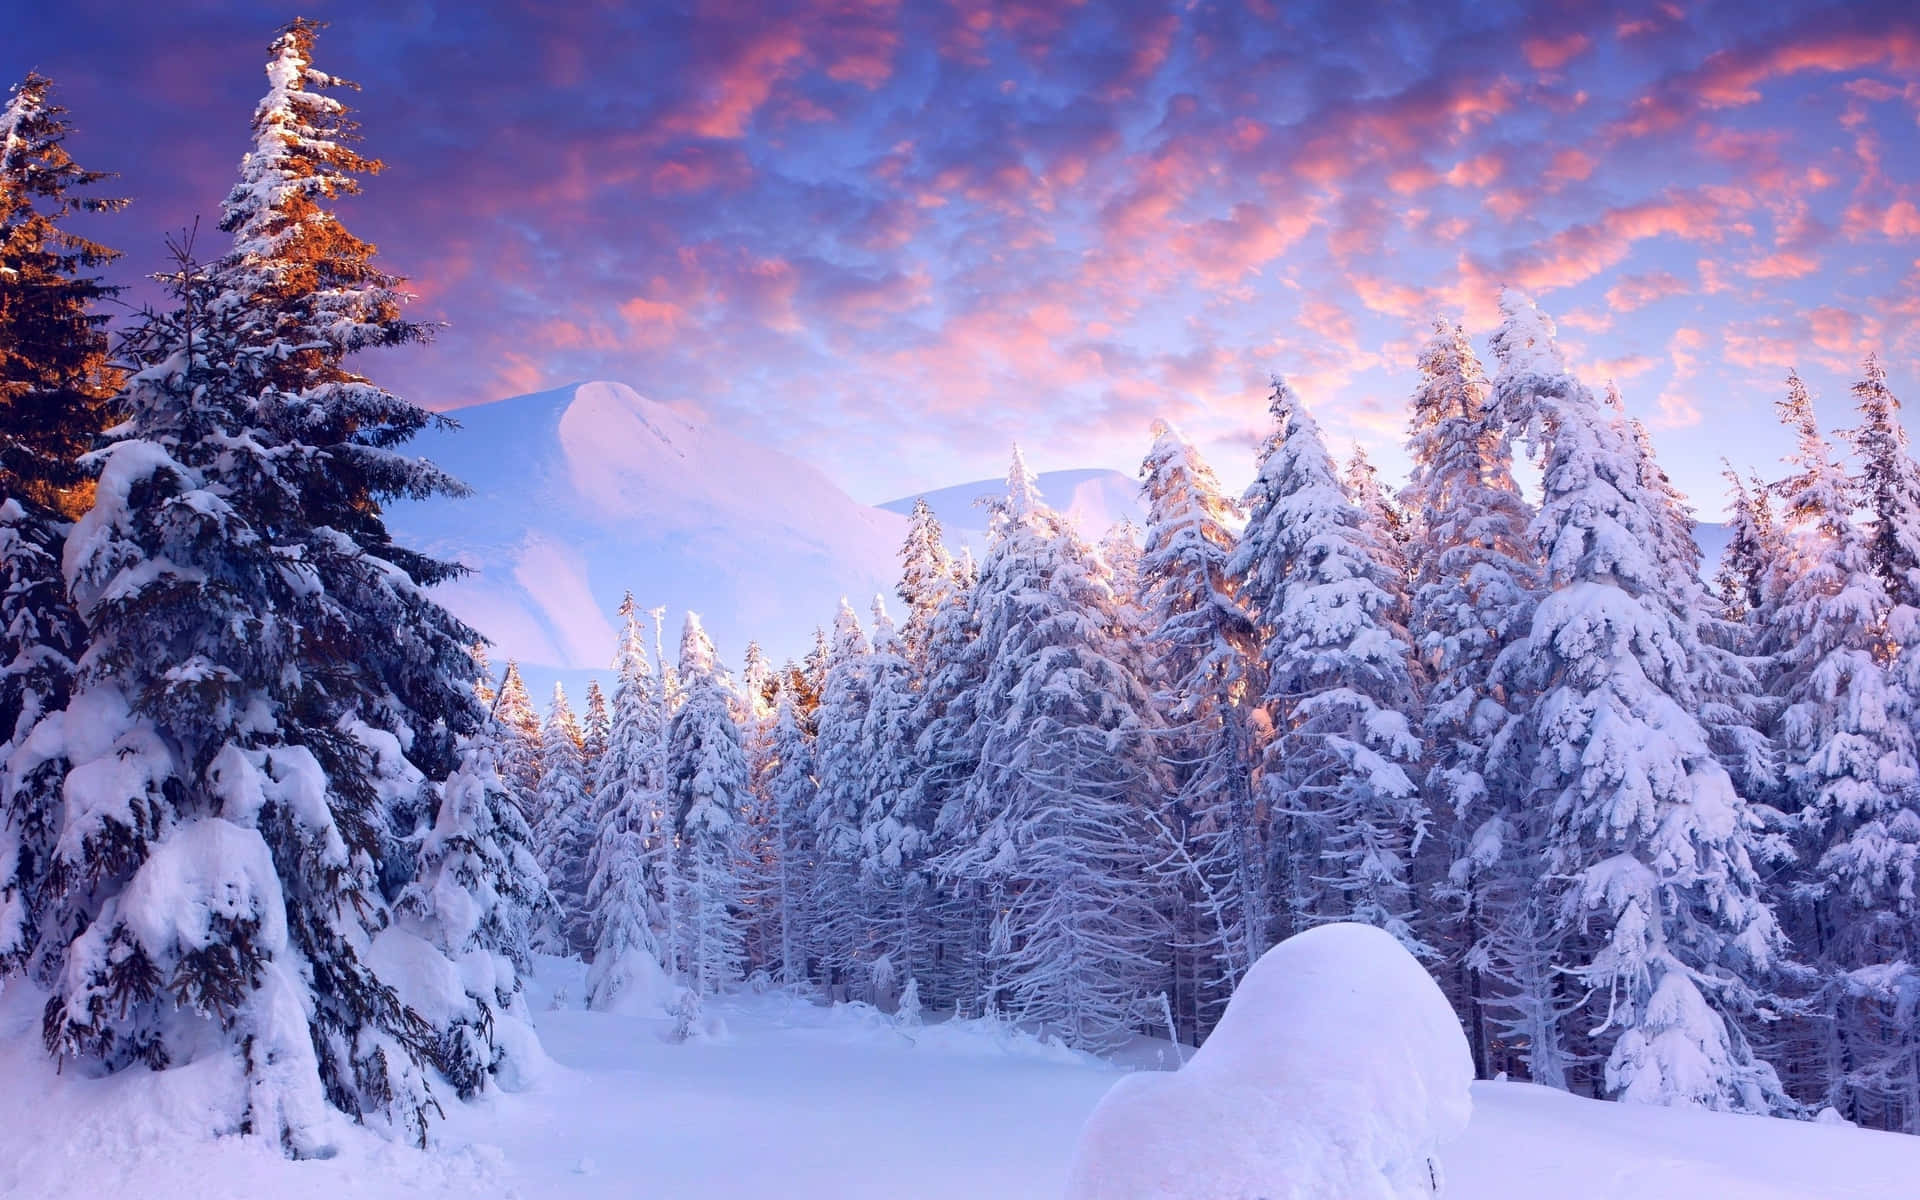 Enjoying the calm serenity of snowy winter wonderland.